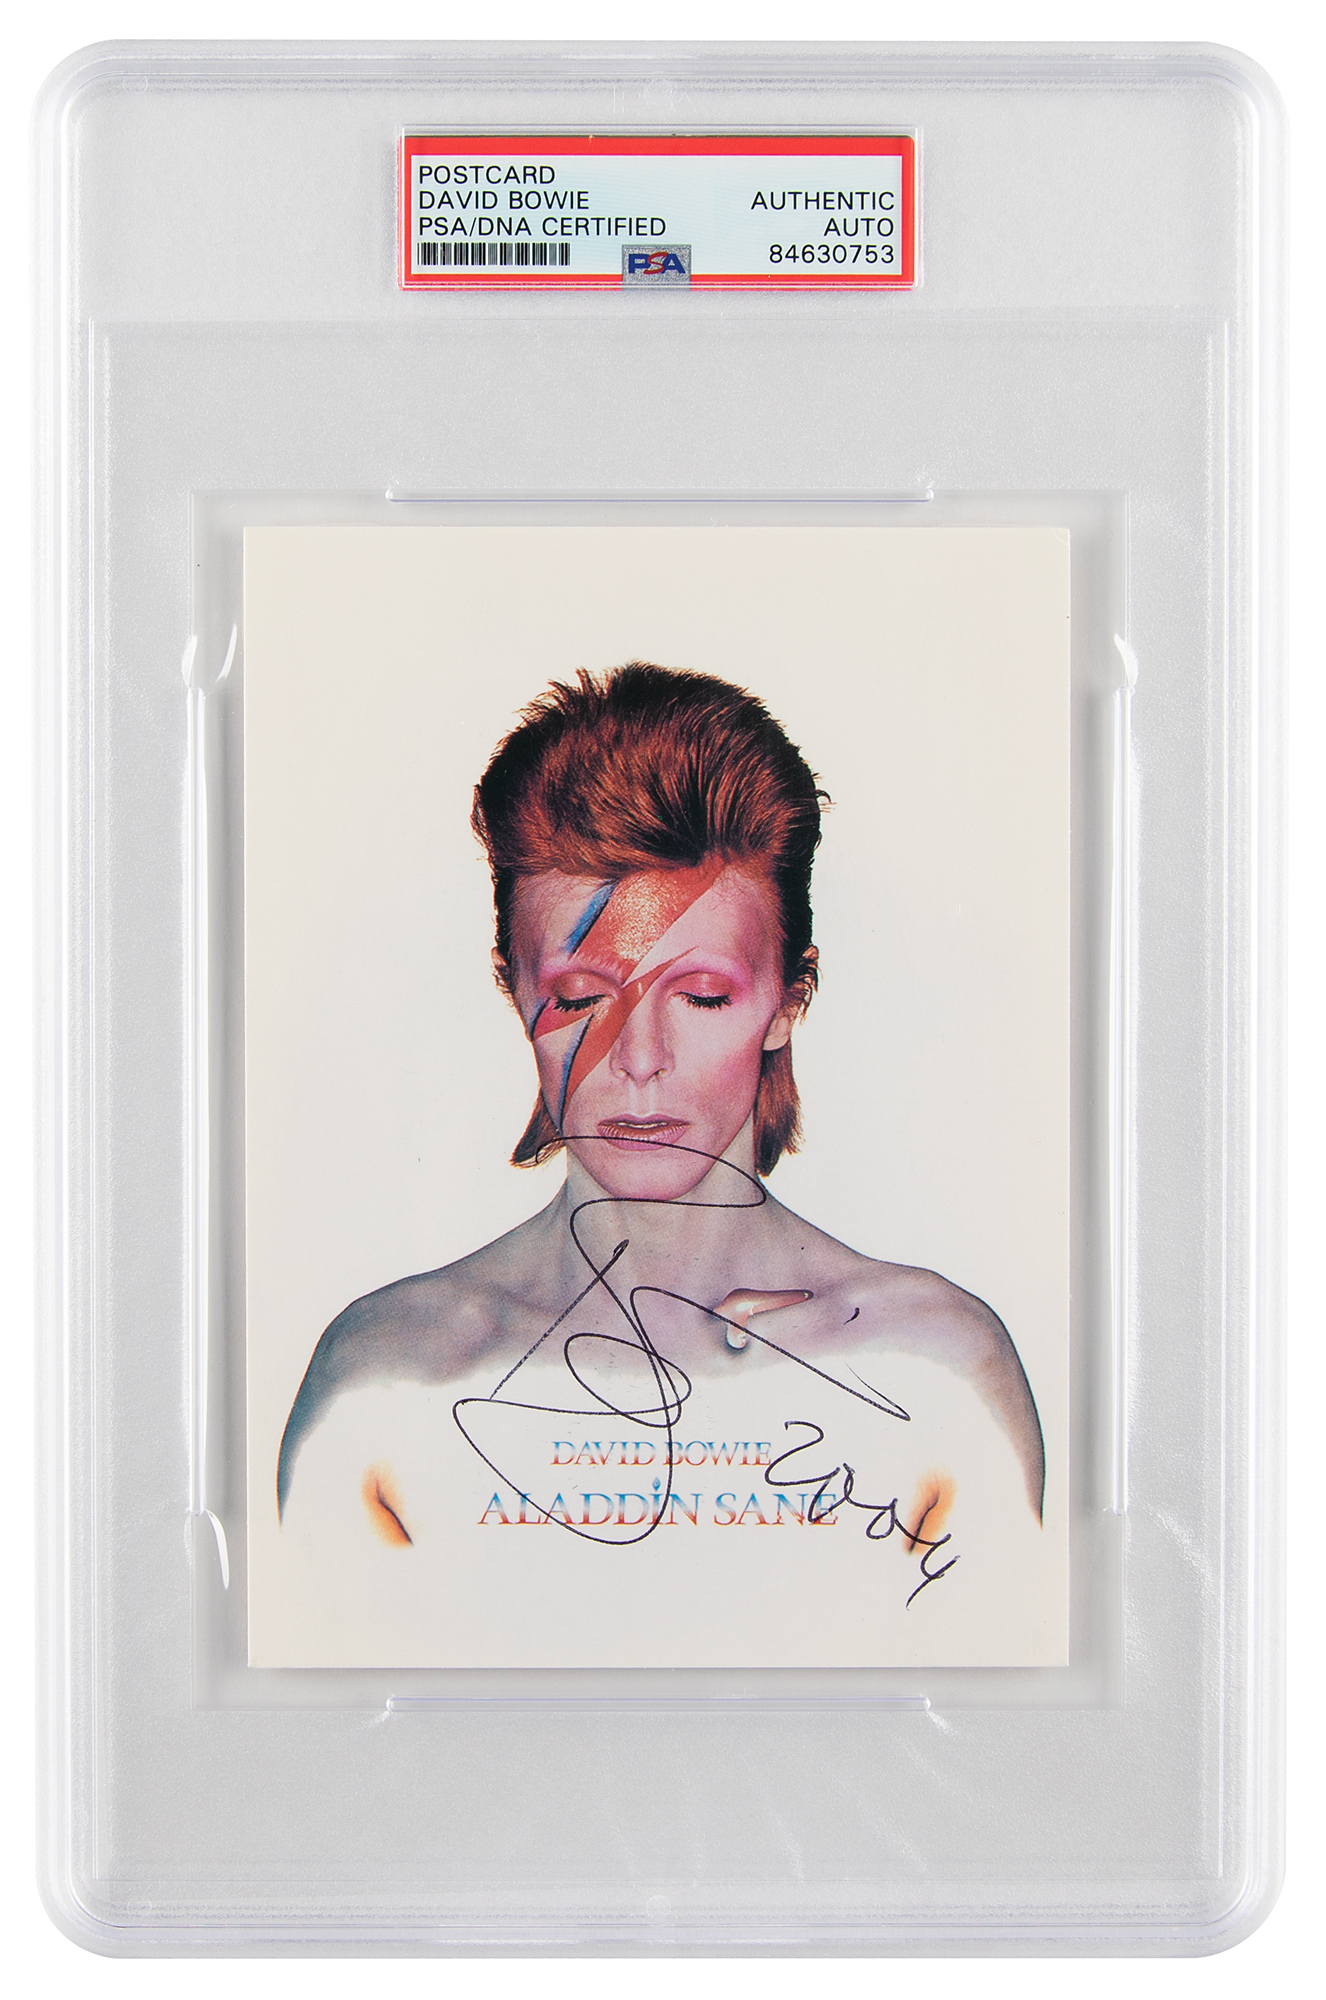 Lot #6477 David Bowie Signed Photograph